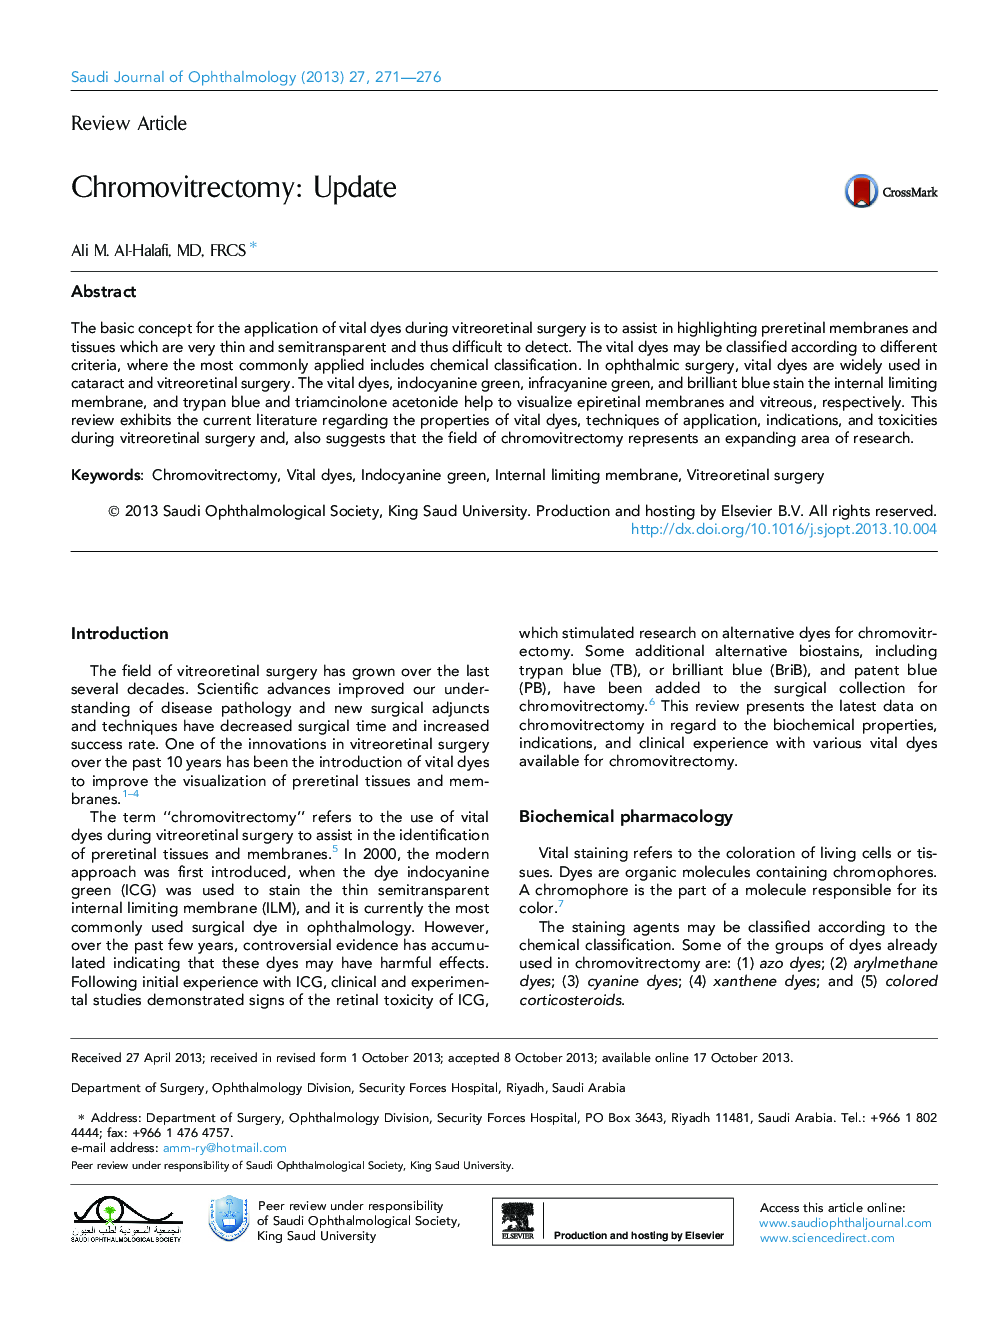 Chromovitrectomy: Update 